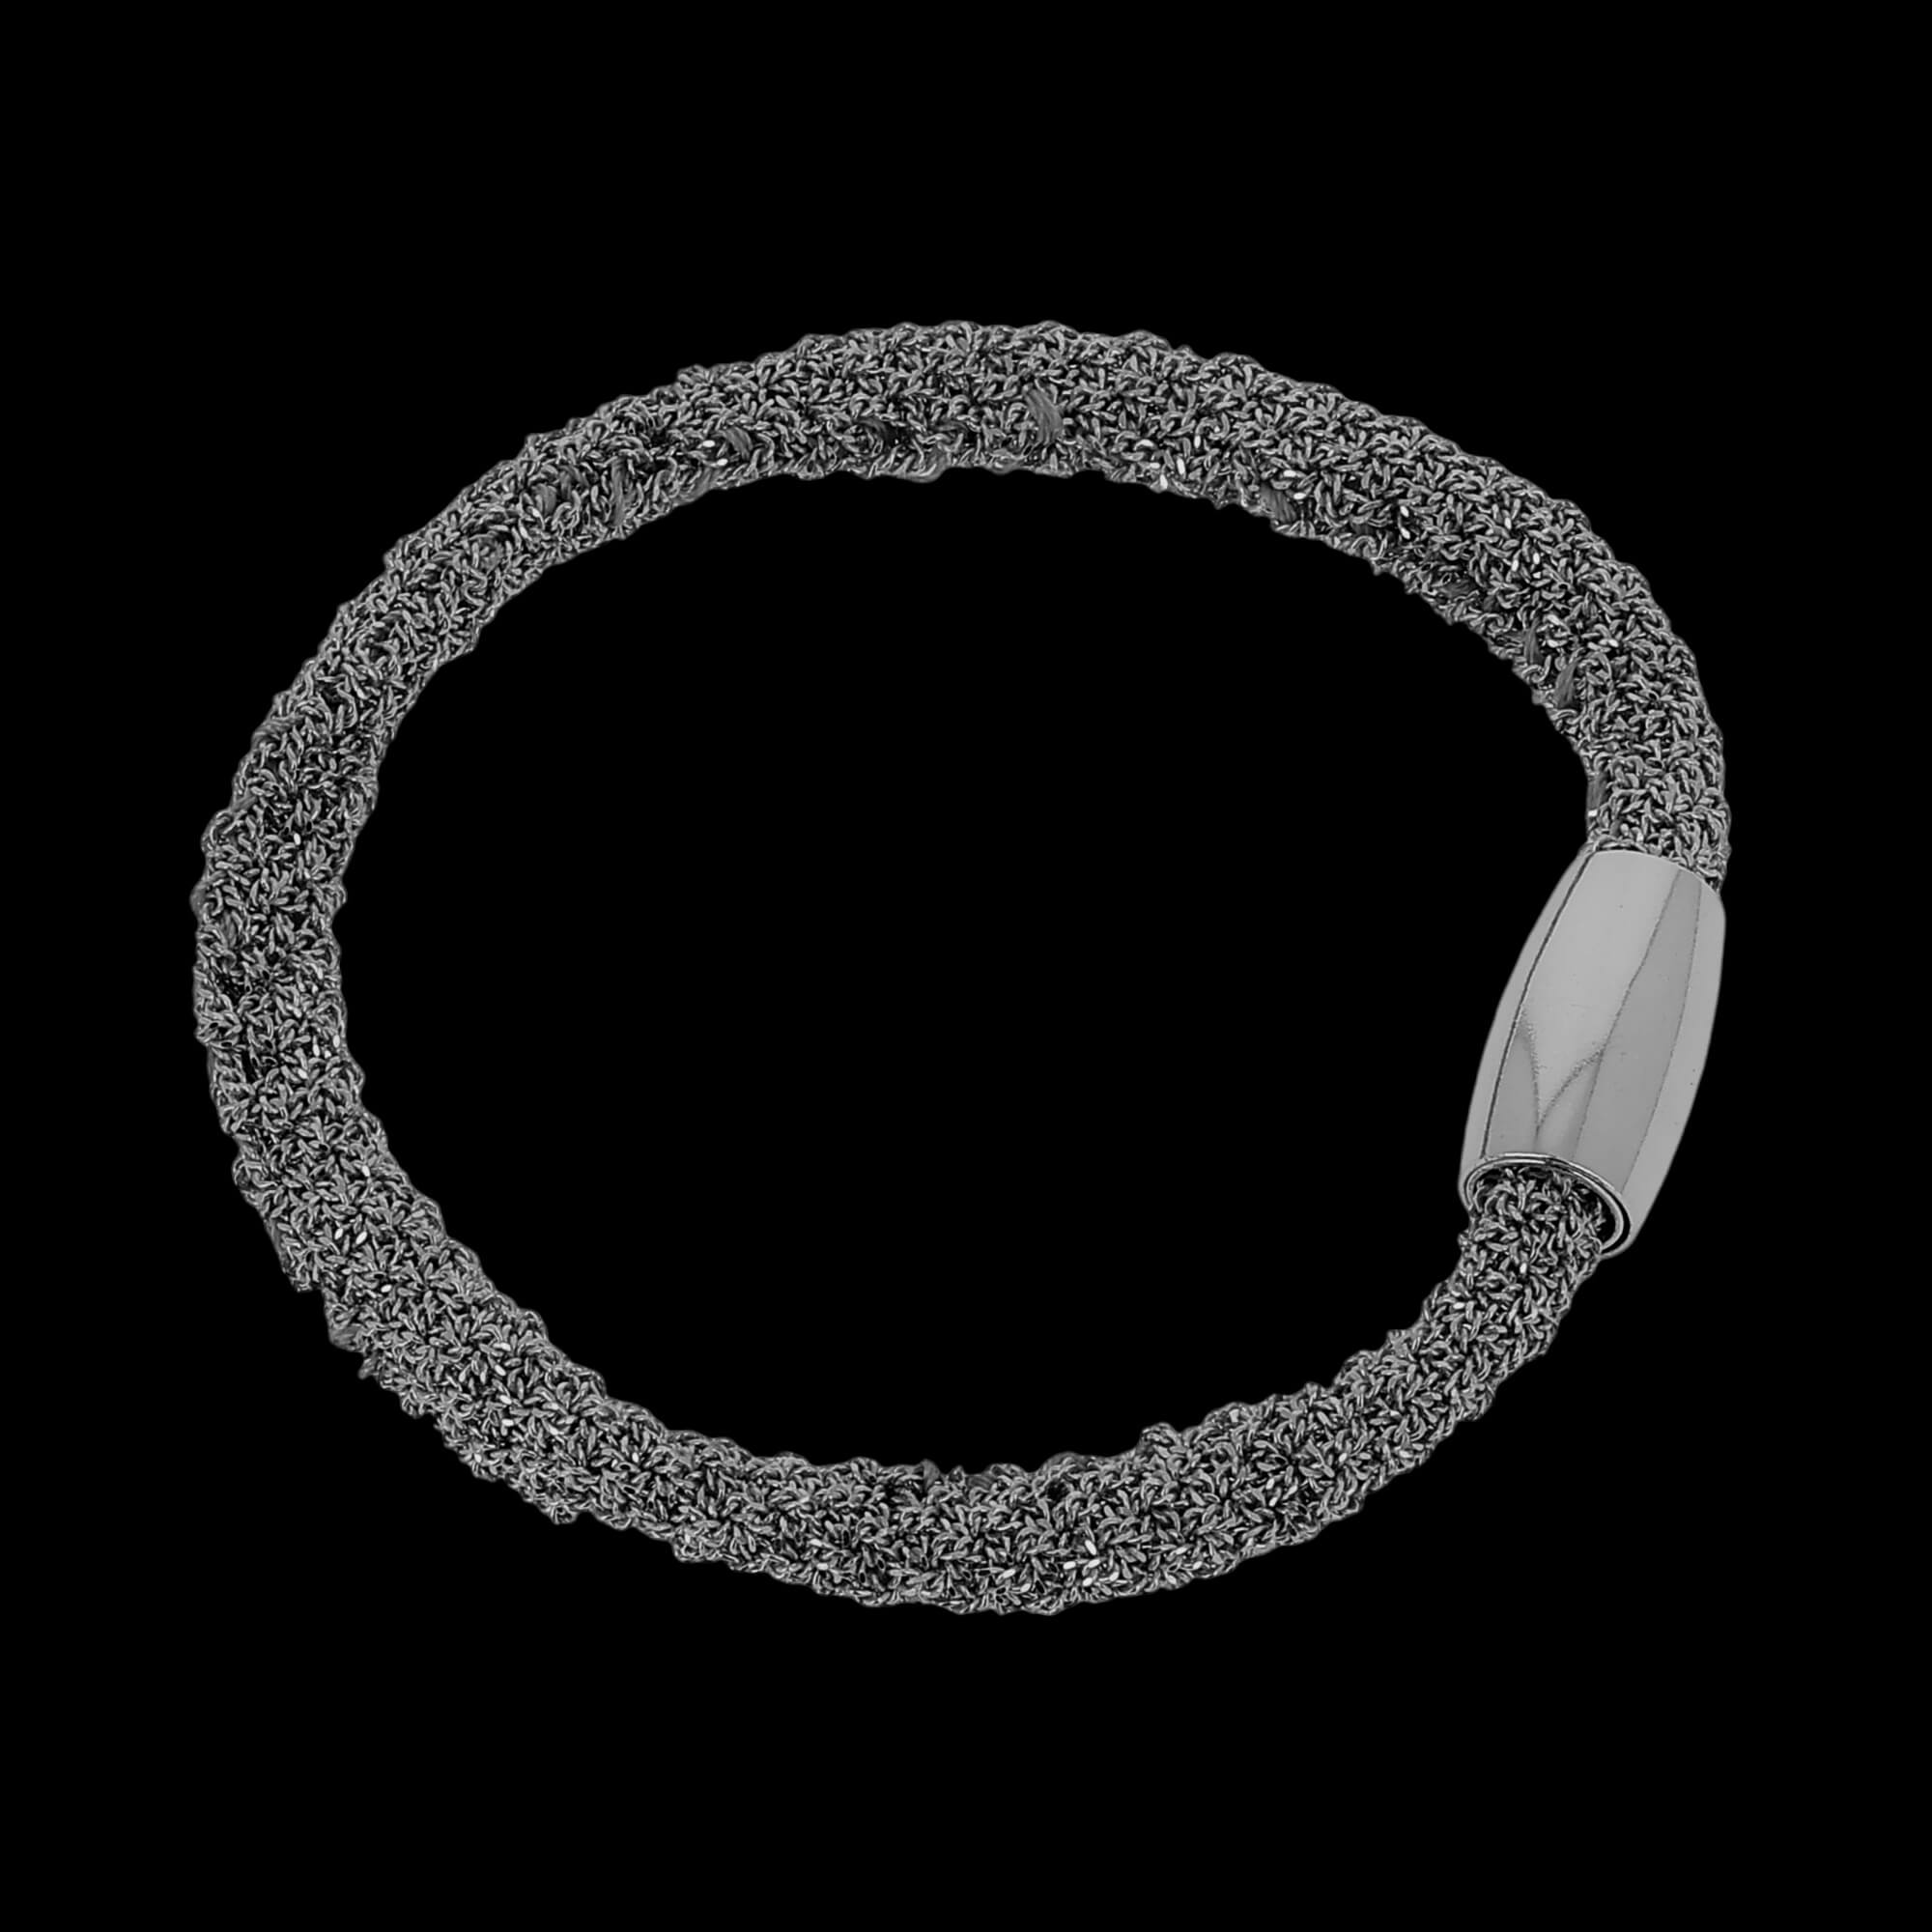 Gray wider silver interwoven bracelet